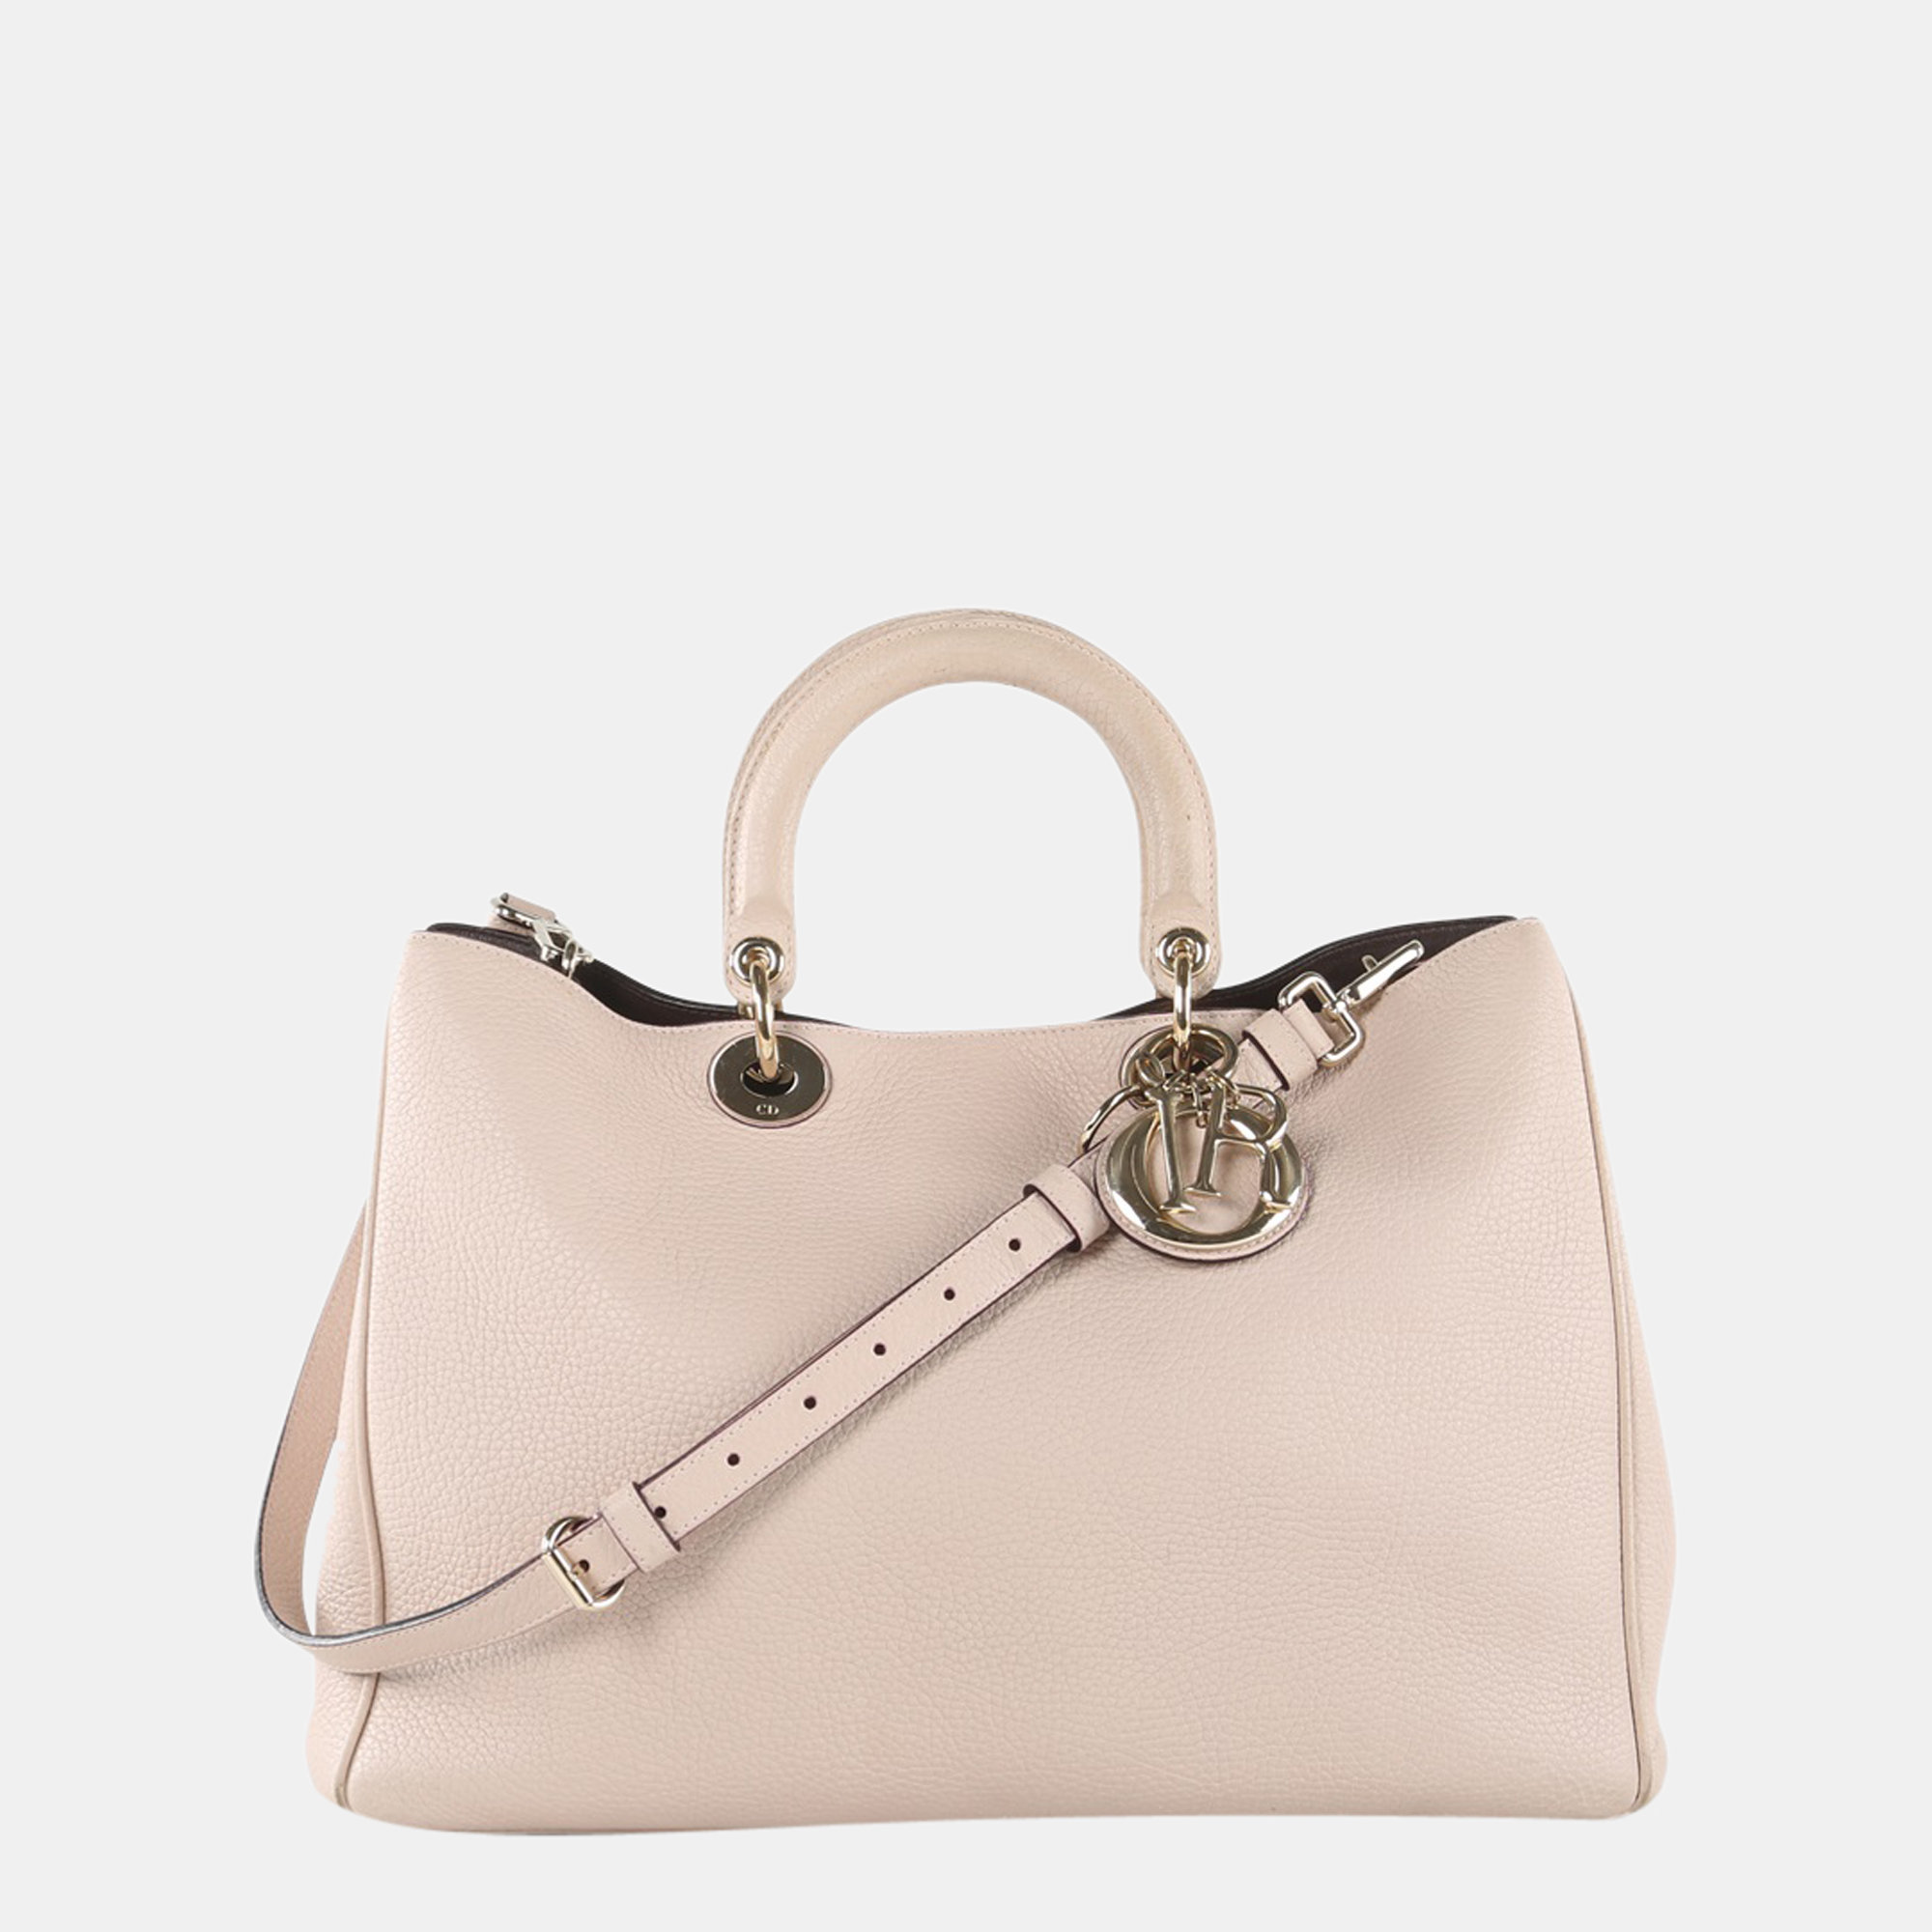 Dior Light Pink Leather Diorissimo Medium Bag